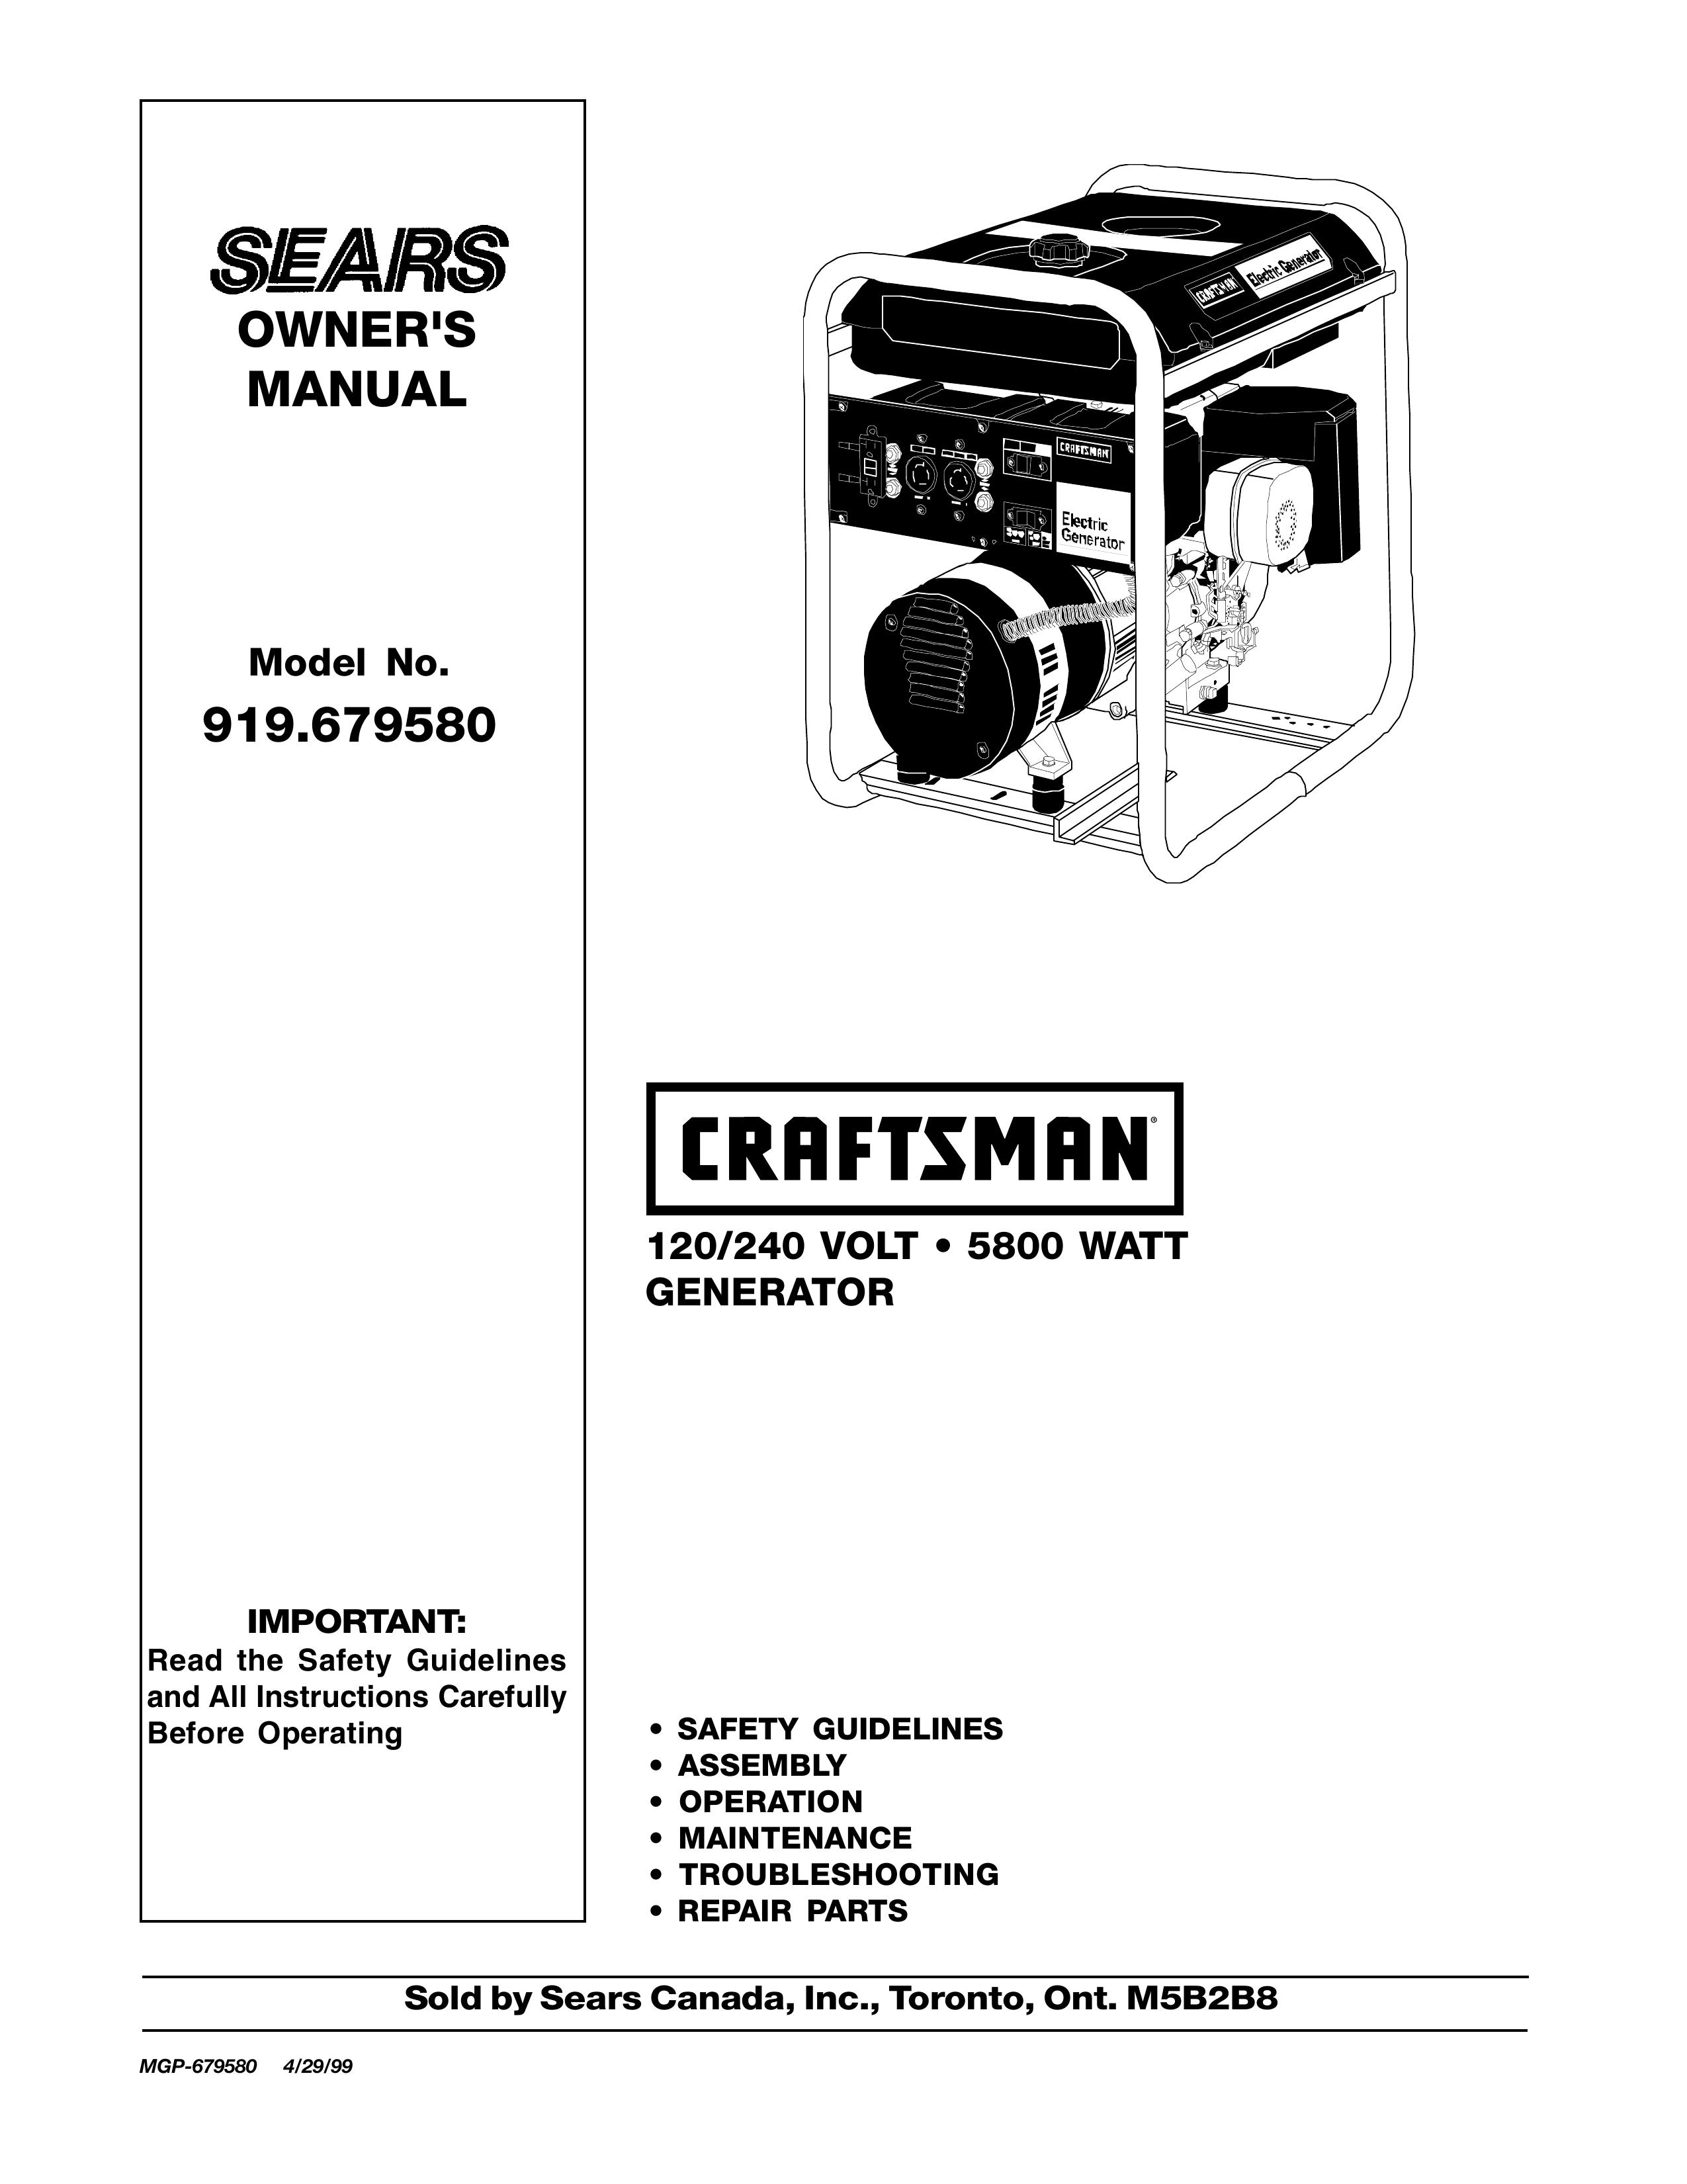 Craftsman 919.679580 Portable Generator User Manual